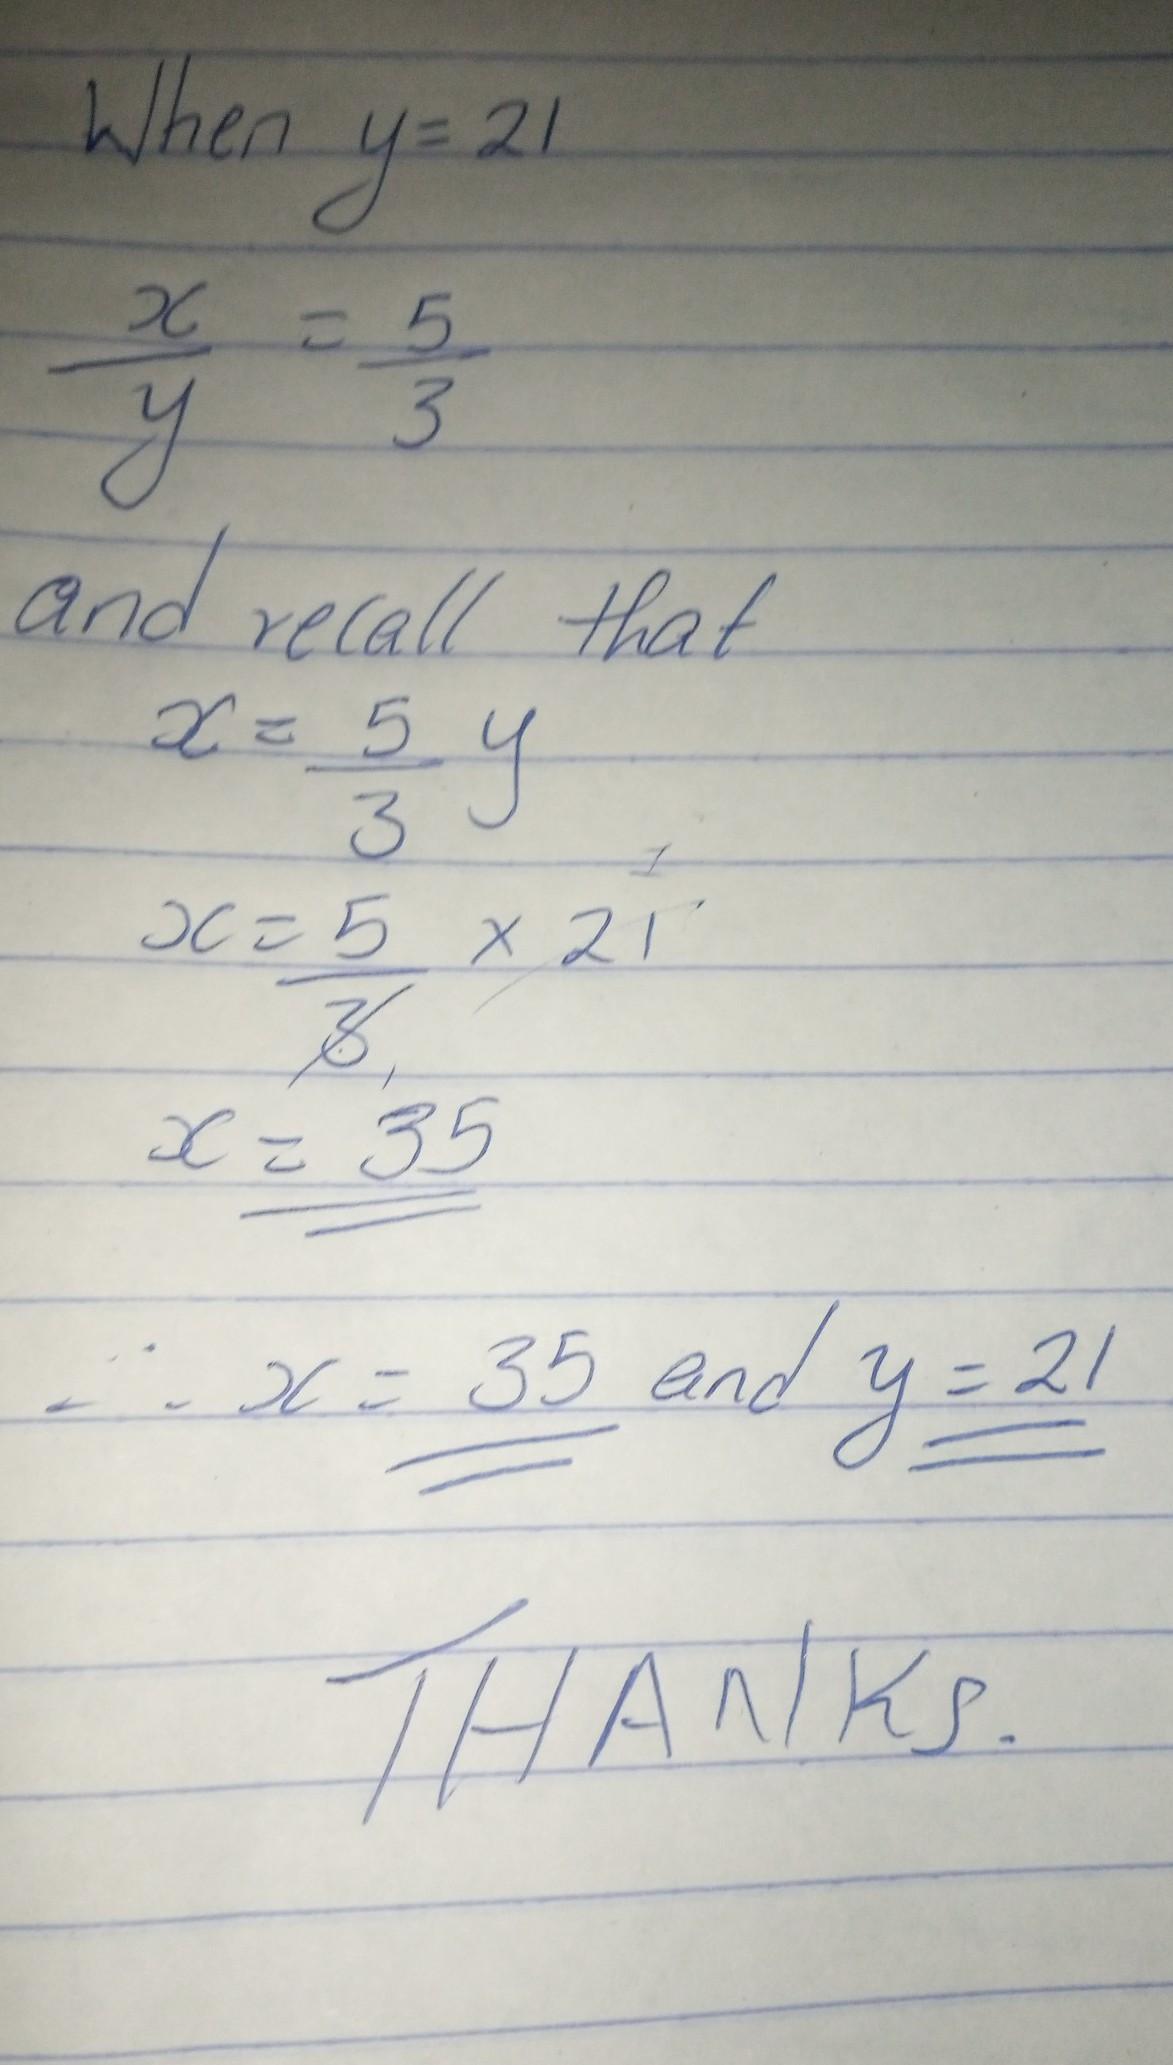 X : Y = 5 : 3andx + Y = 56Work Out The Value Of X - Y